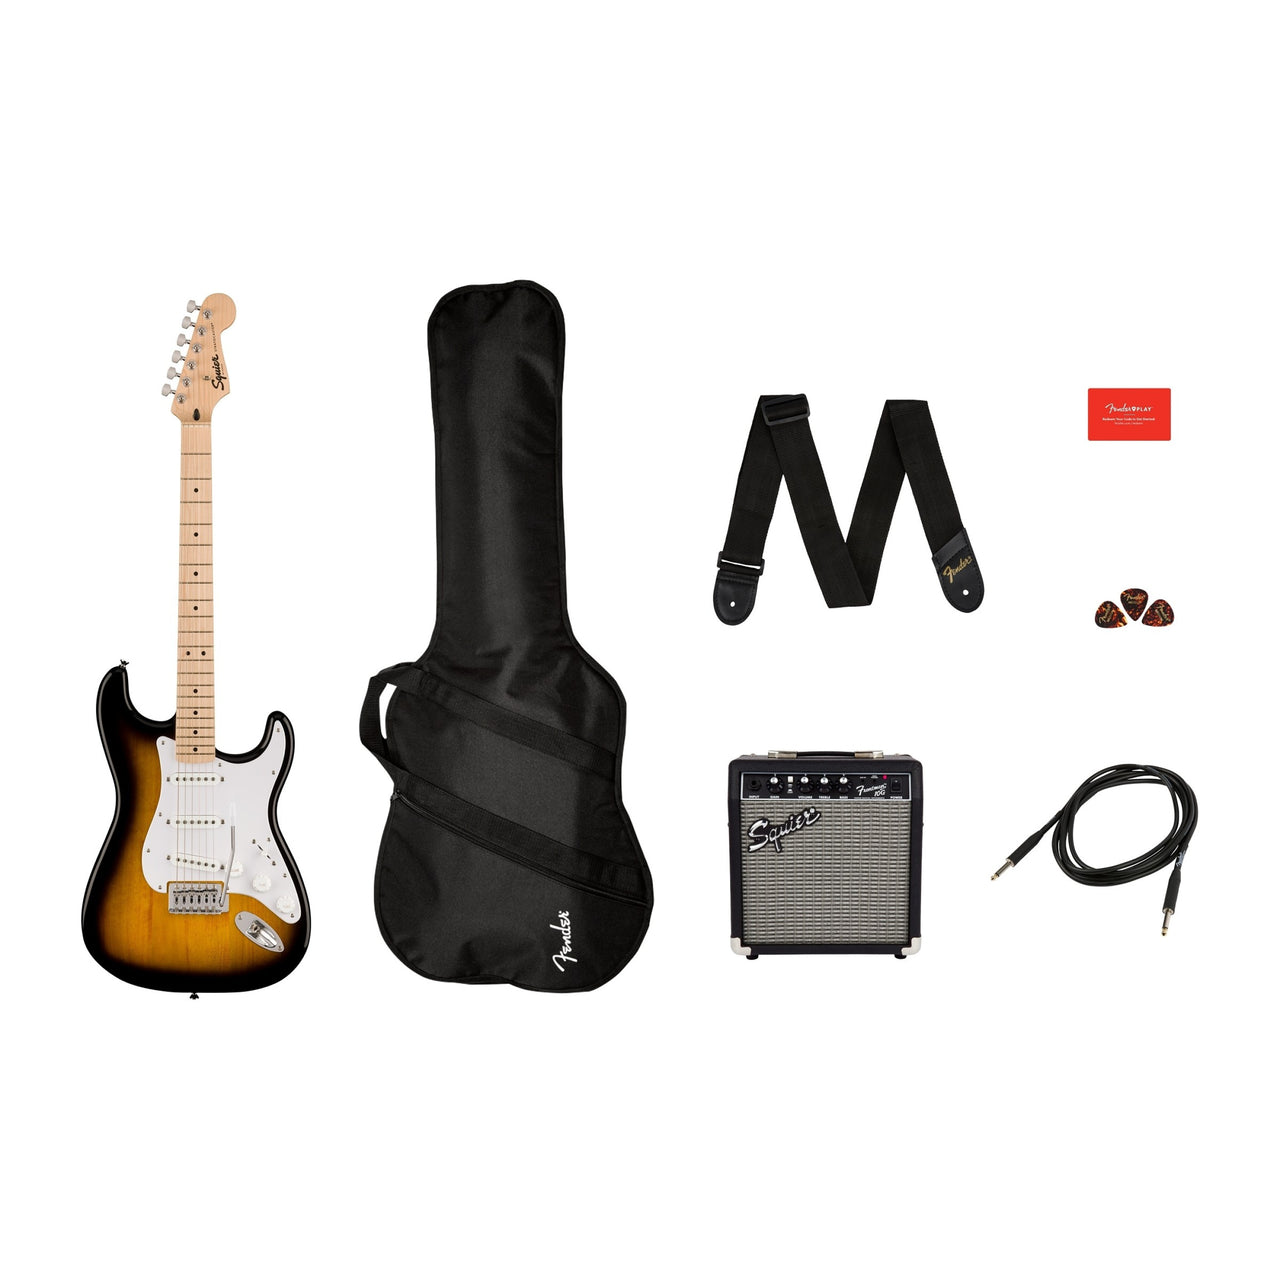 Paquete Guitarra Fender Squier Sonic Stratocaster Sombreada 10g 0371720003